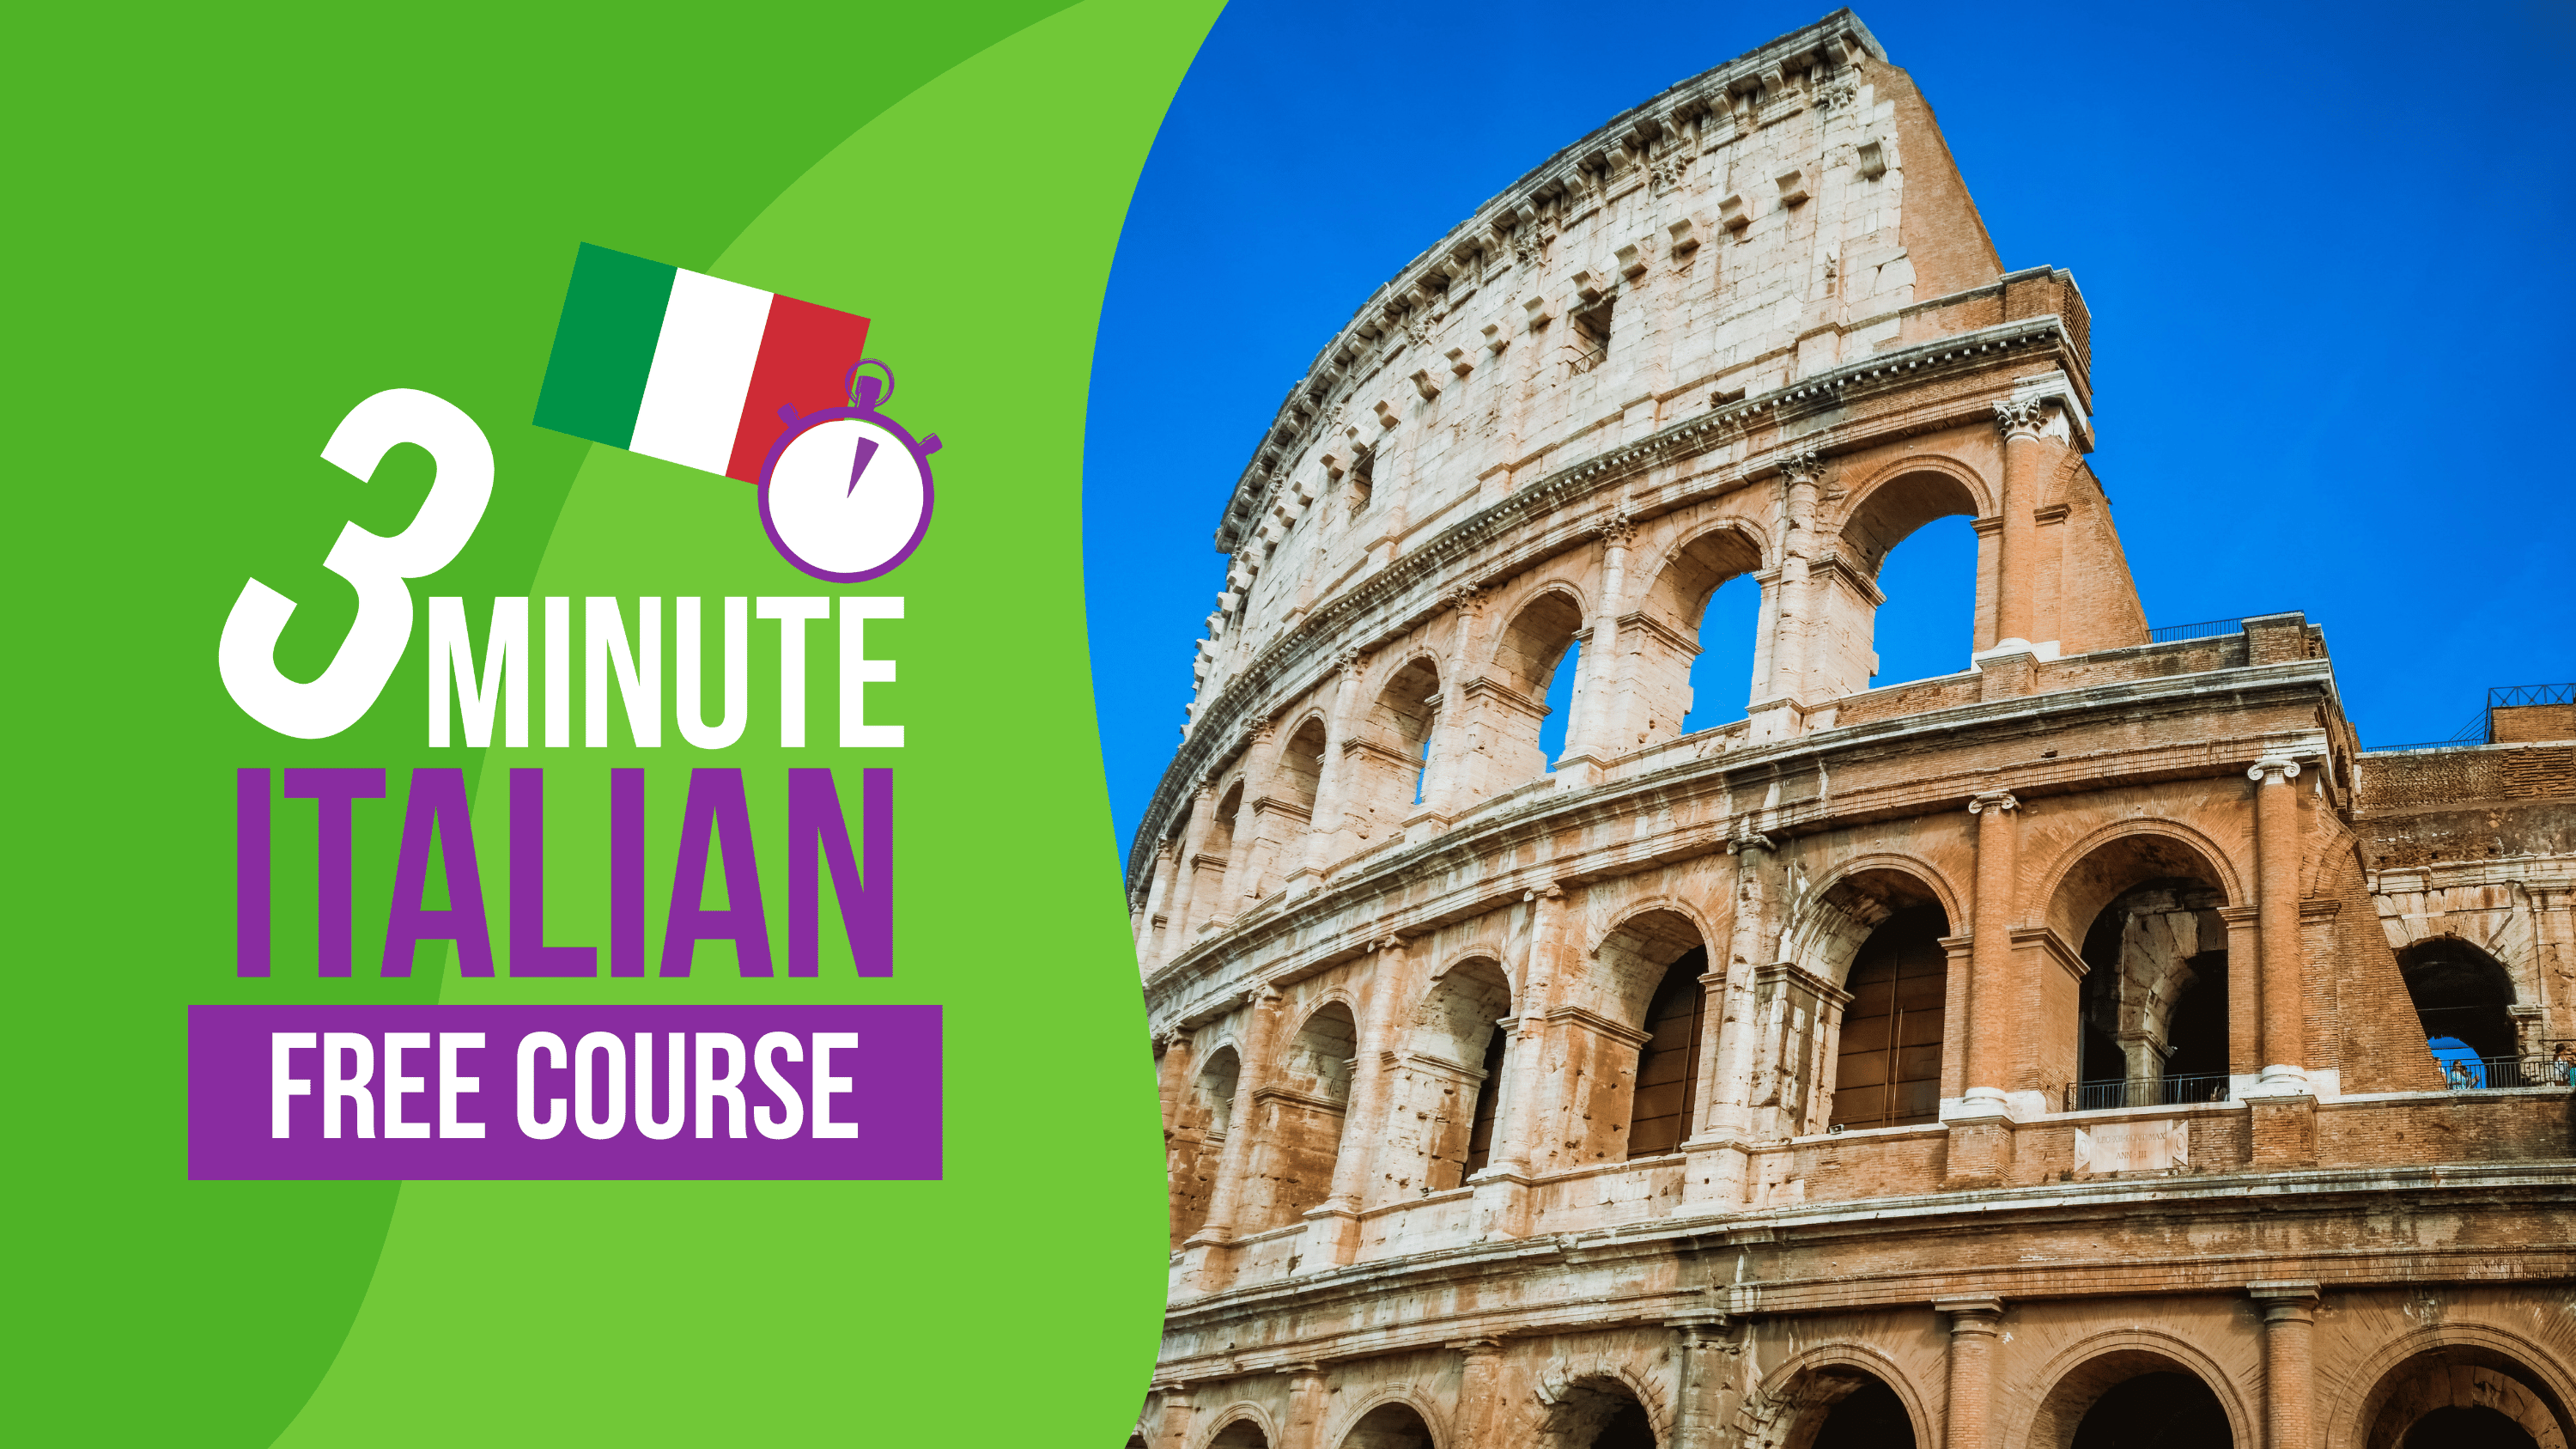 3 Minute Italian - Free course